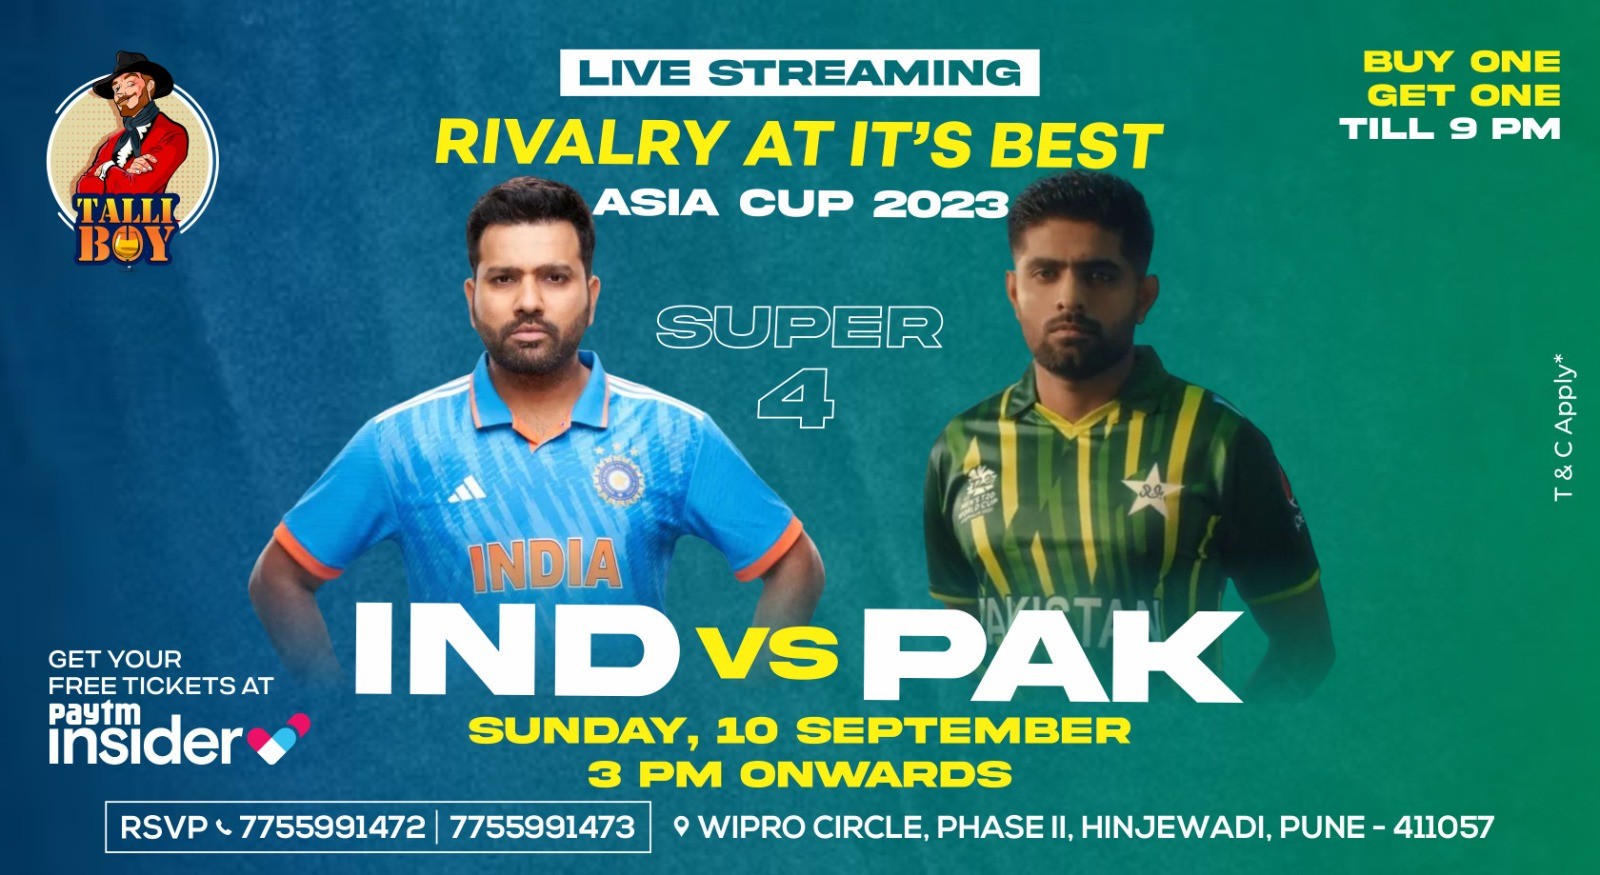 Asia Cup 2023-Super 4-India Vs Pakistan Live Screening at Talliboy Hinjewadi!